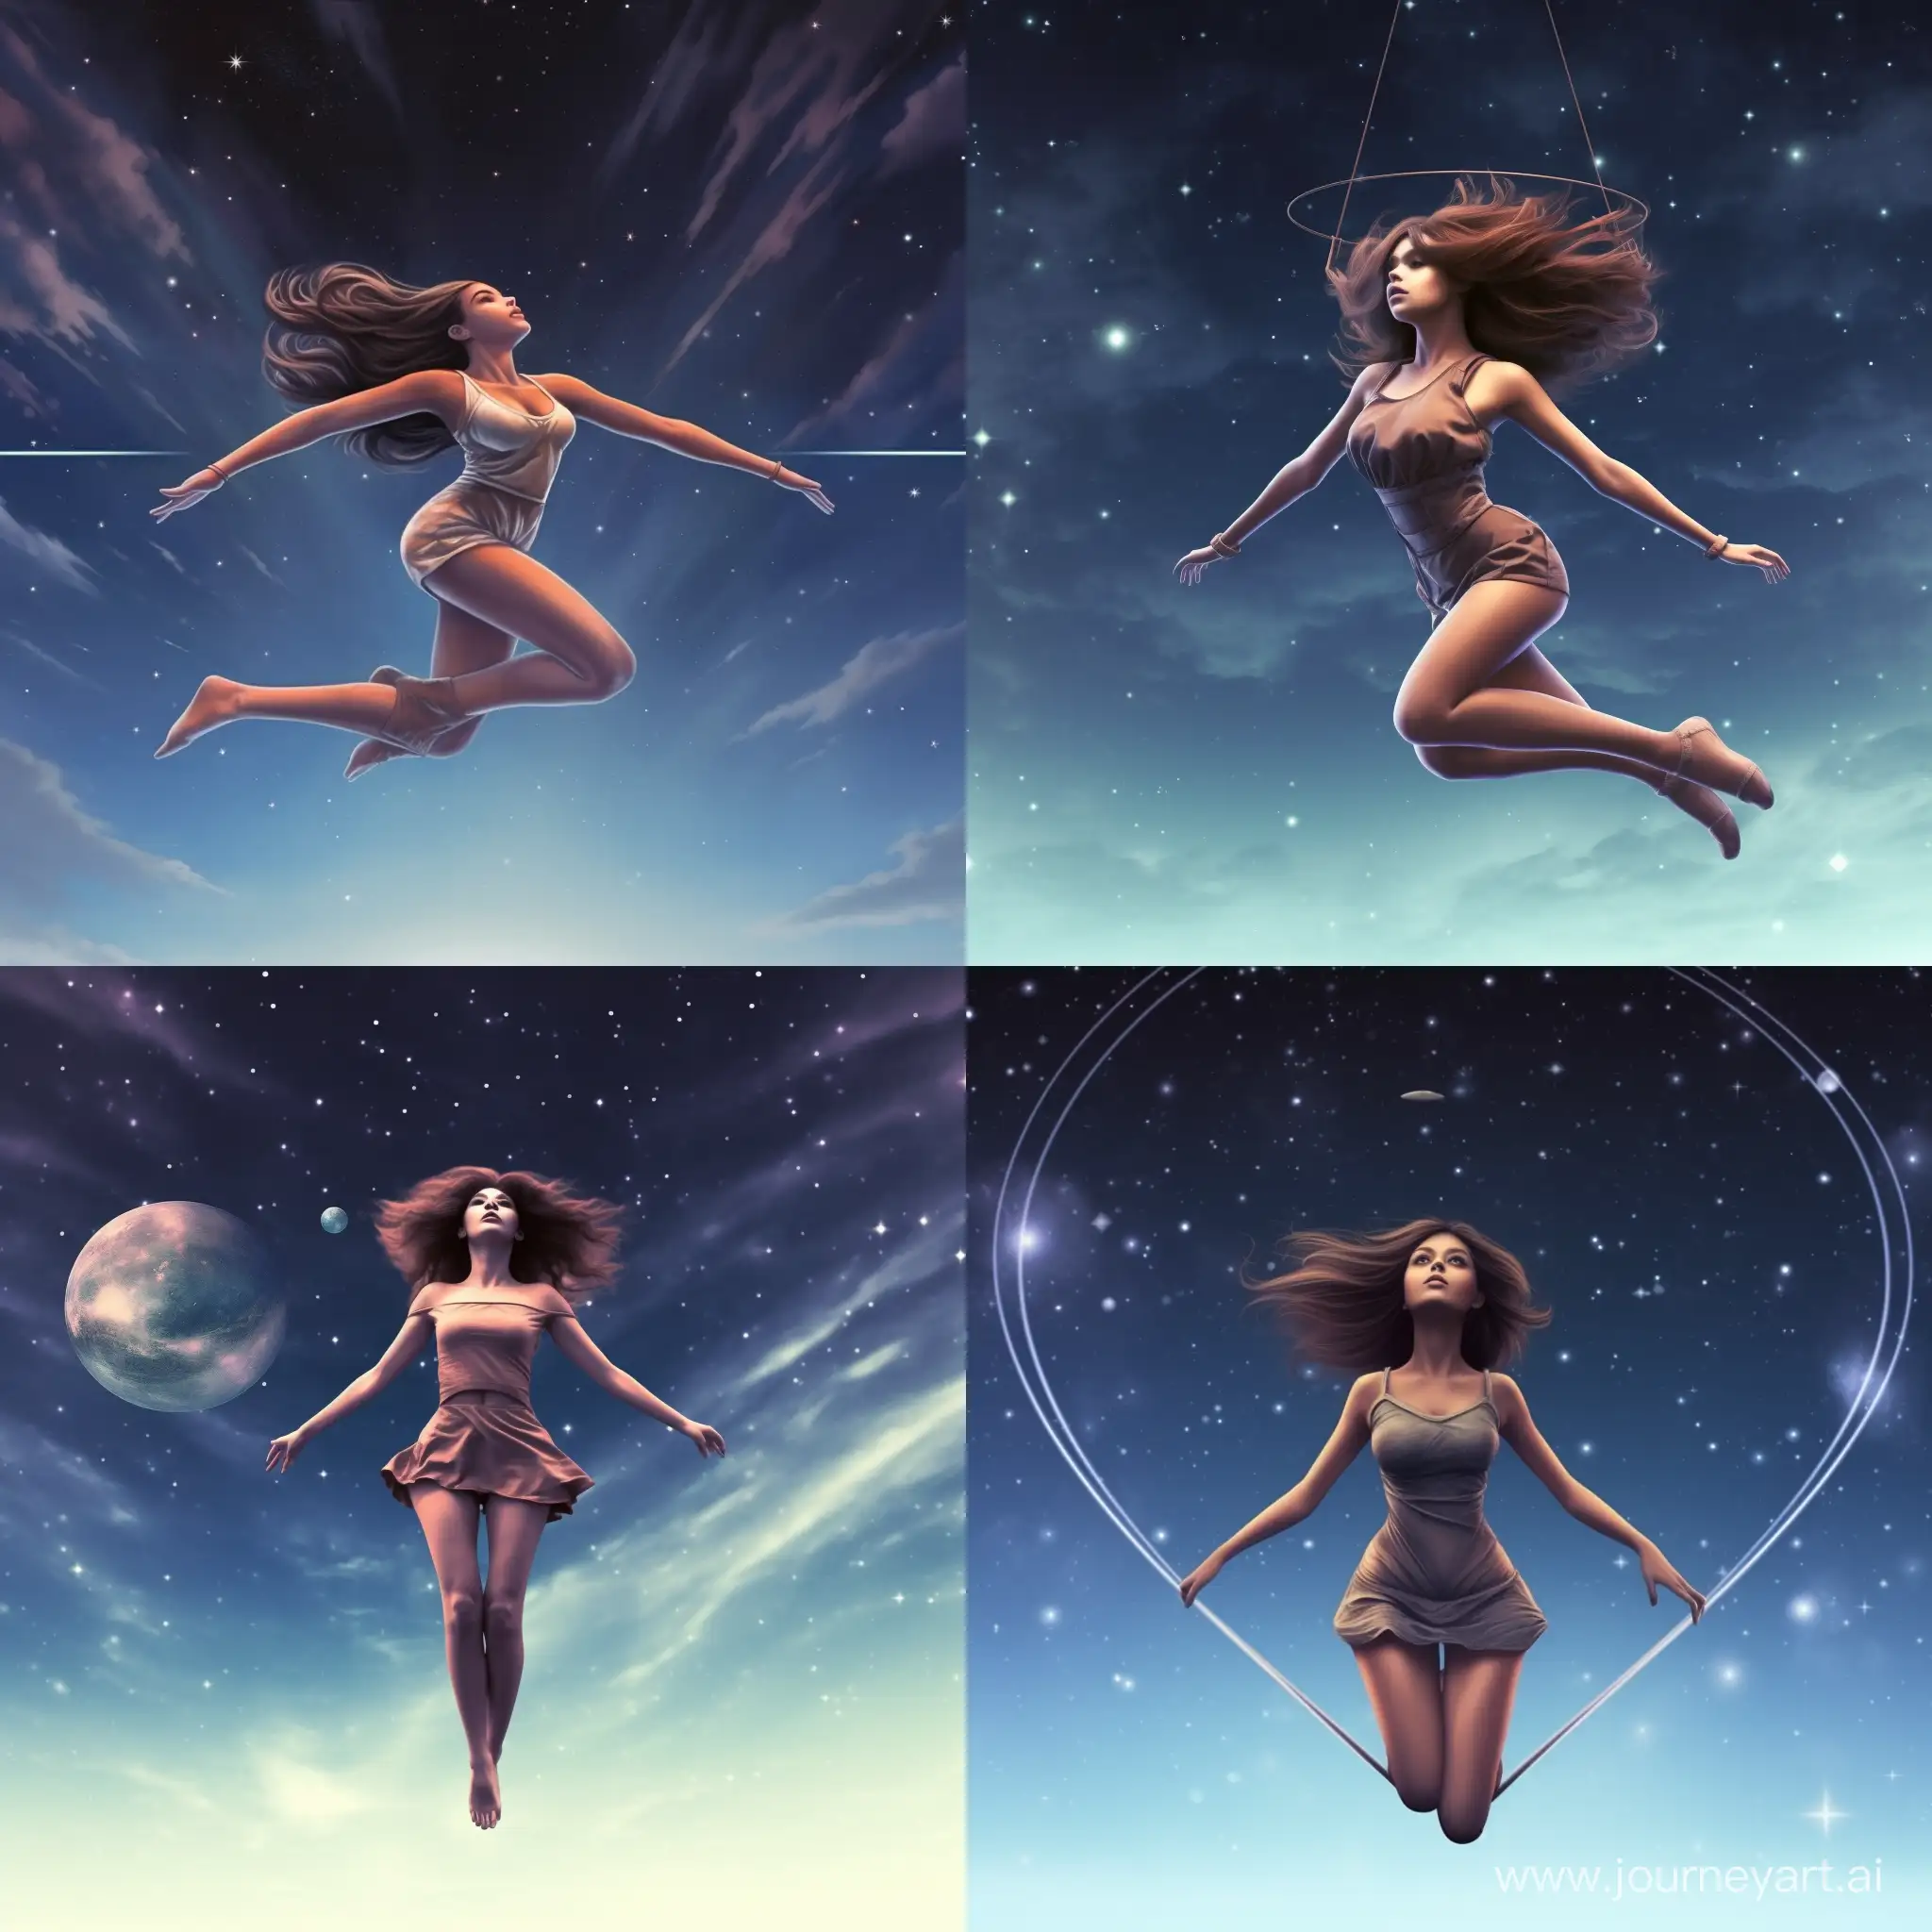 Adventurous-Space-Flight-BikiniClad-Girl-Soaring-in-Cosmic-Splendor